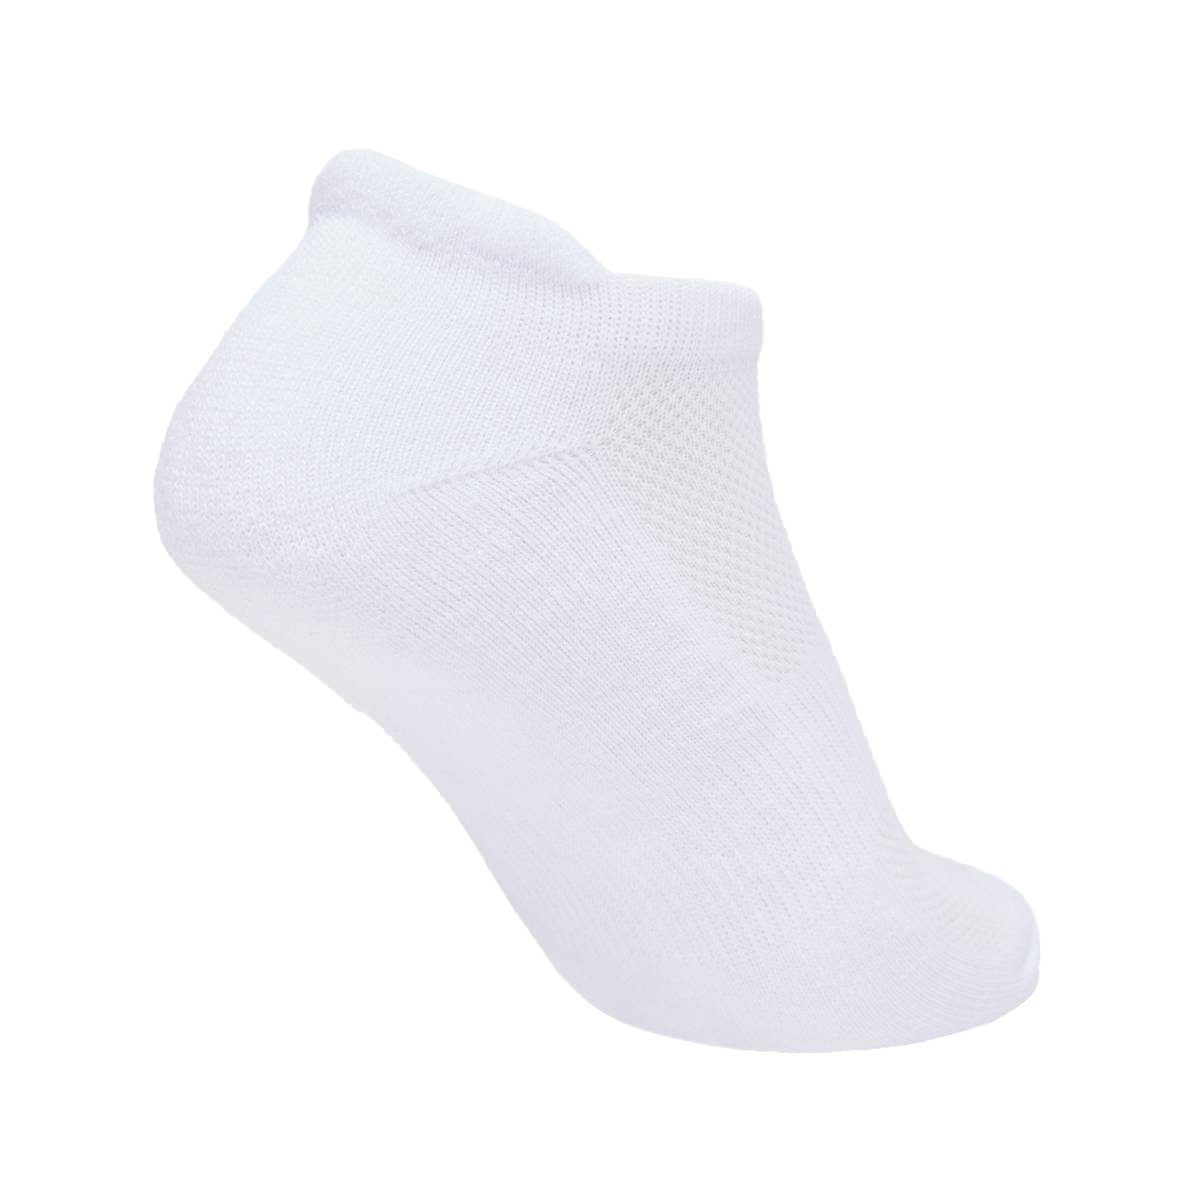 Trainer Unisex Weiß Sneaker Ellesse 6 Reban, - Sportsocken Paar Socken,